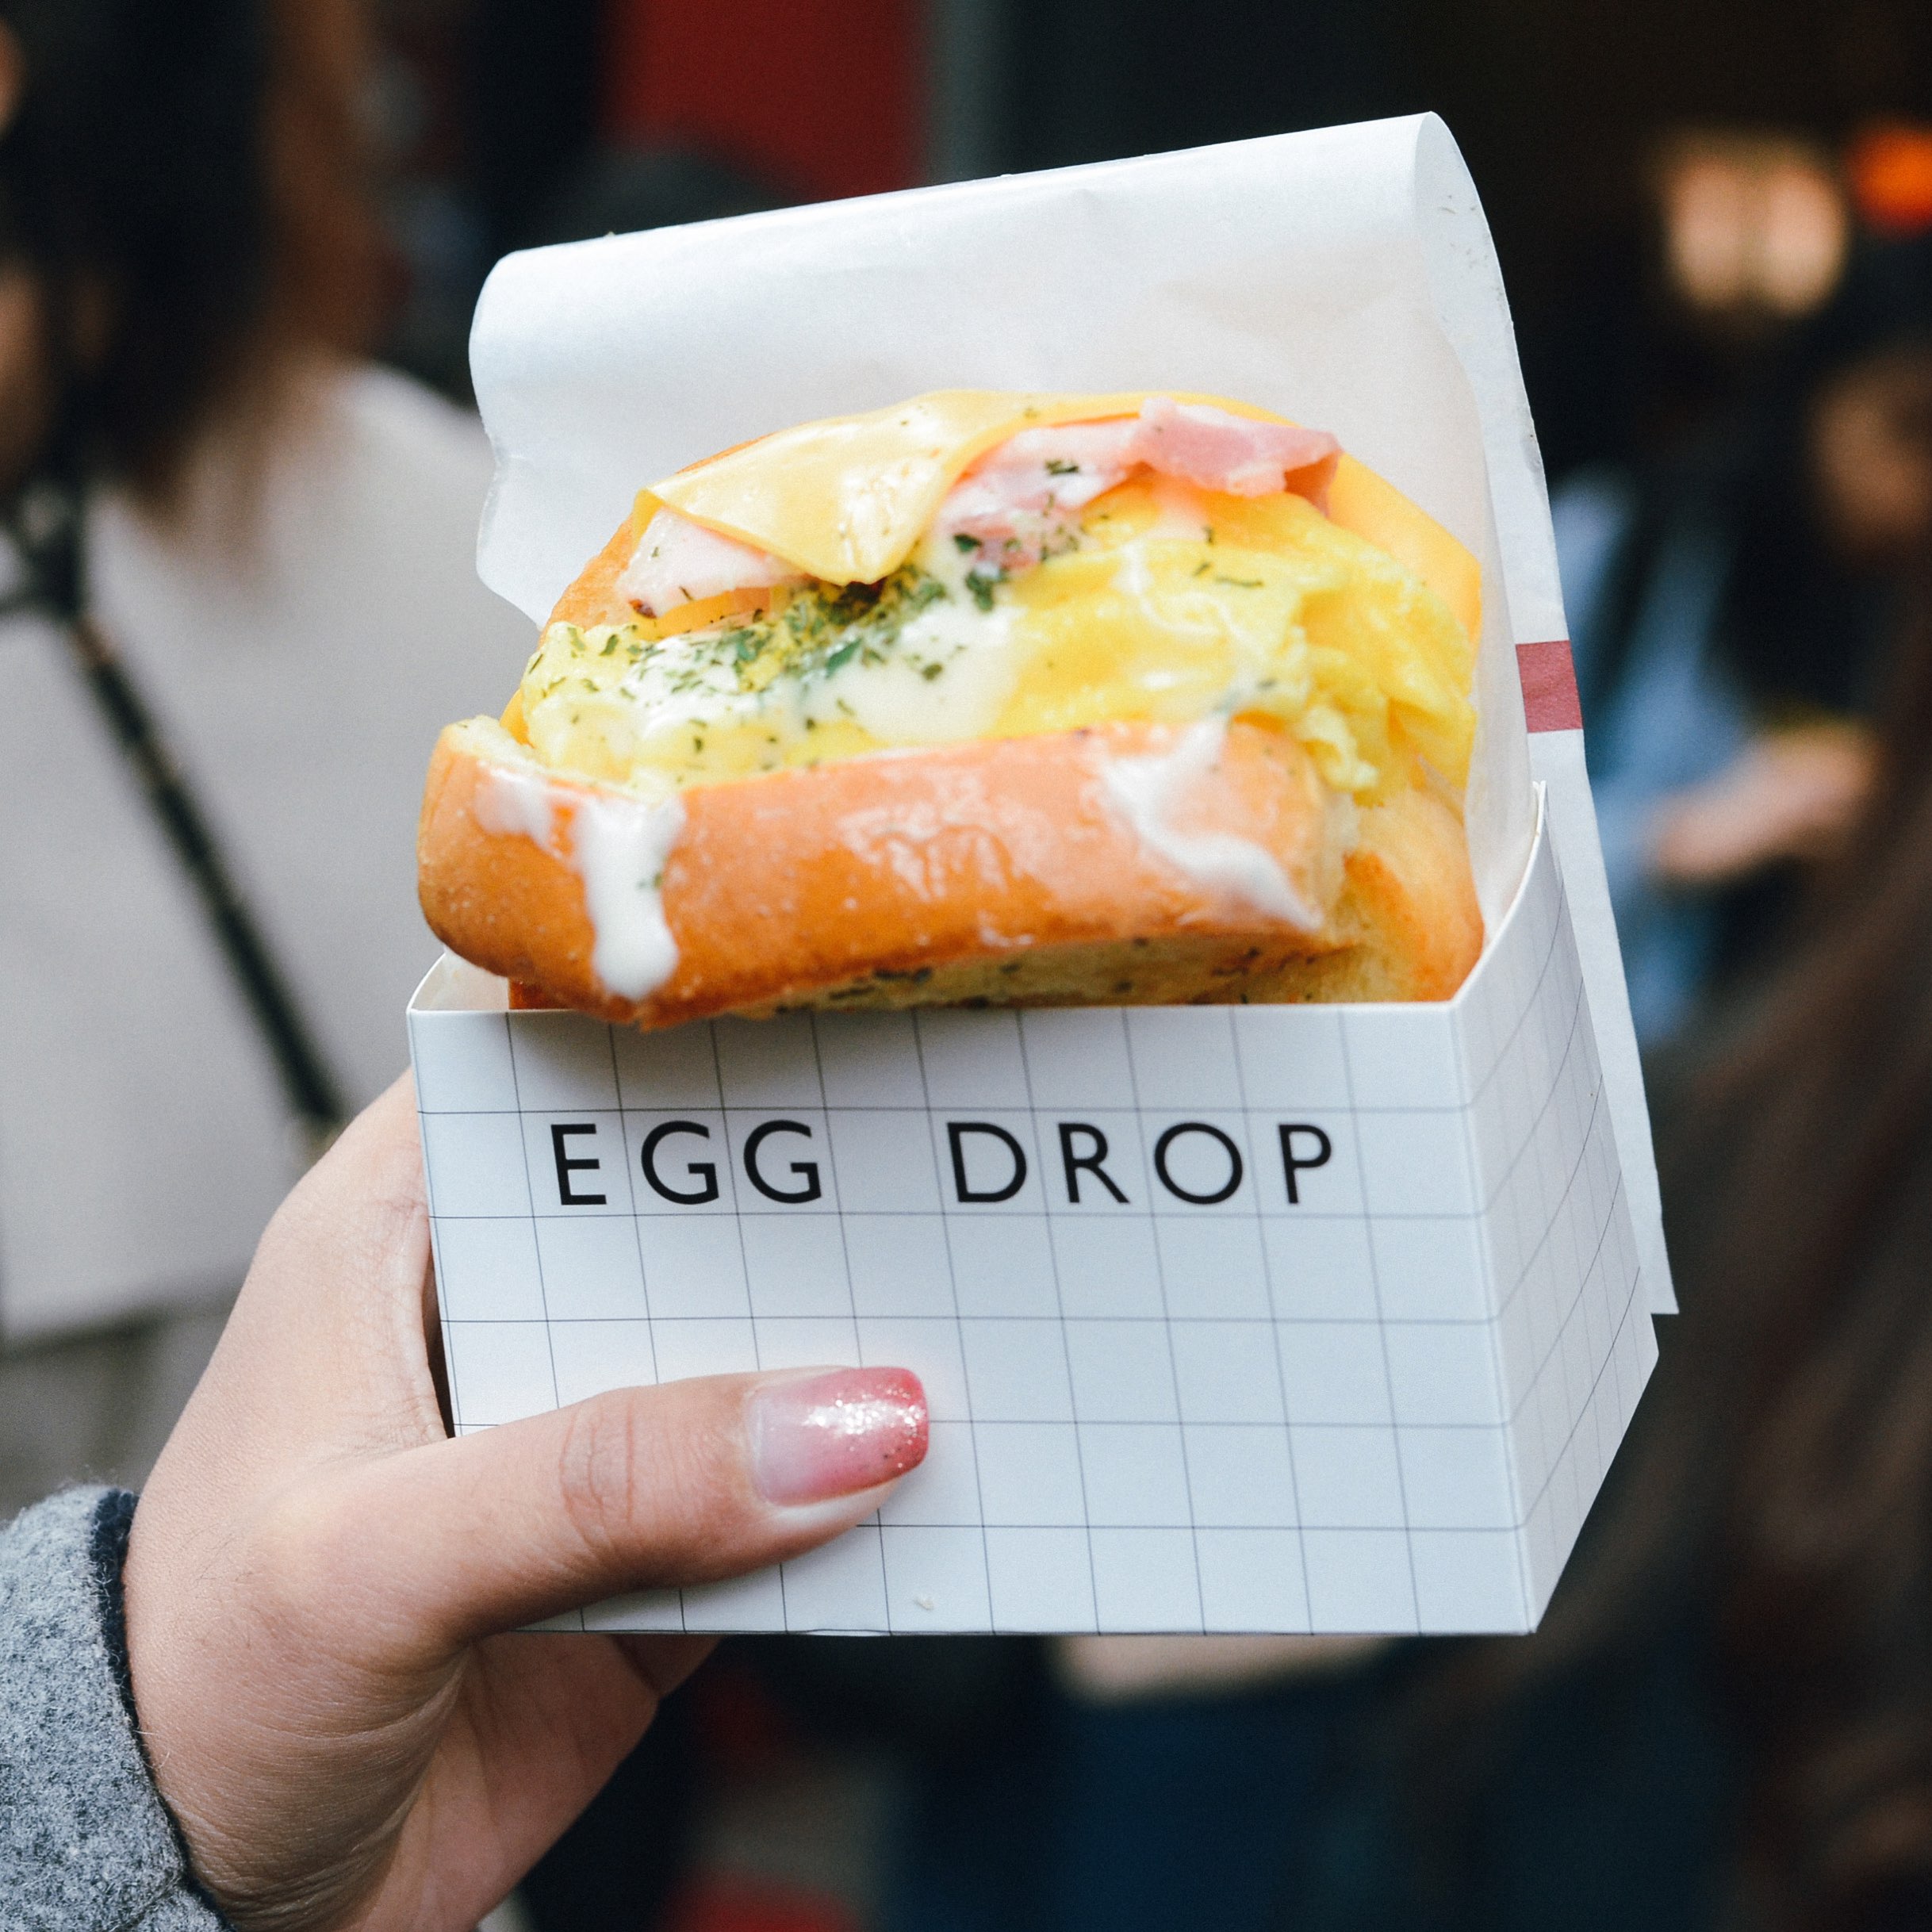 EGG DROP แซนวิชไข่สุดฮิต มีหลายสาขาในโซล | Trip.com เกาหลีใต้ บล็อกท่องเที่ยว